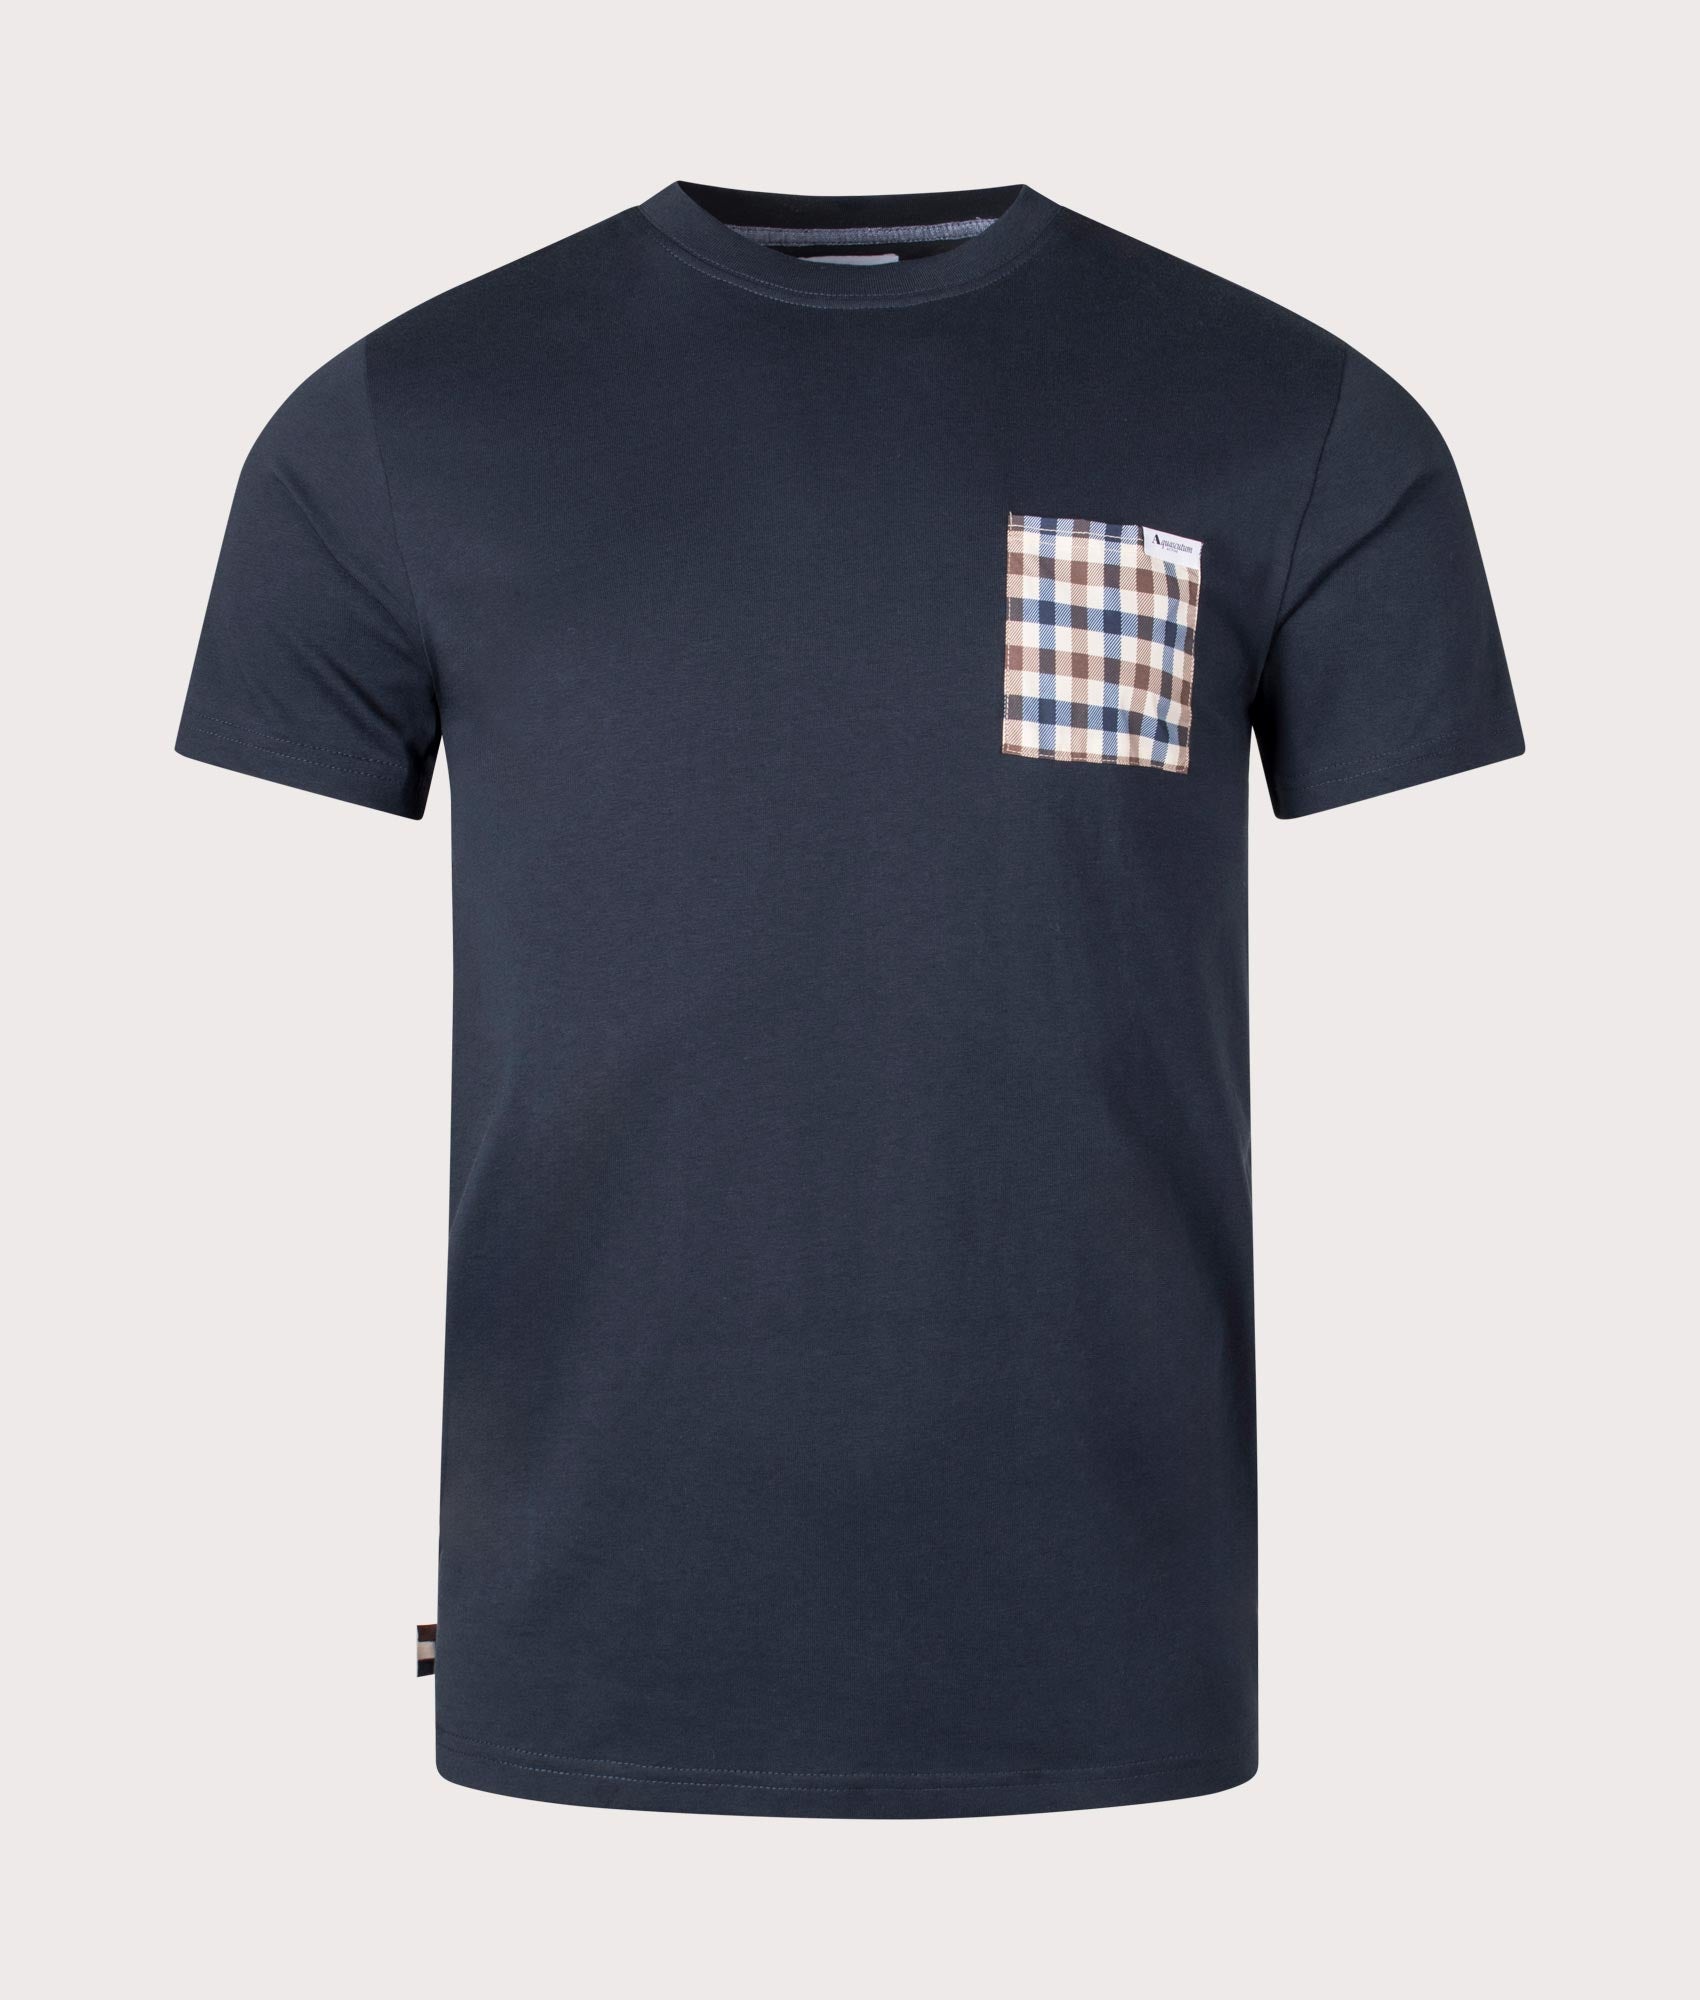 Aquascutum Mens Active Club Check Pocket T-Shirt - Colour: 11 Navy - Size: Medium